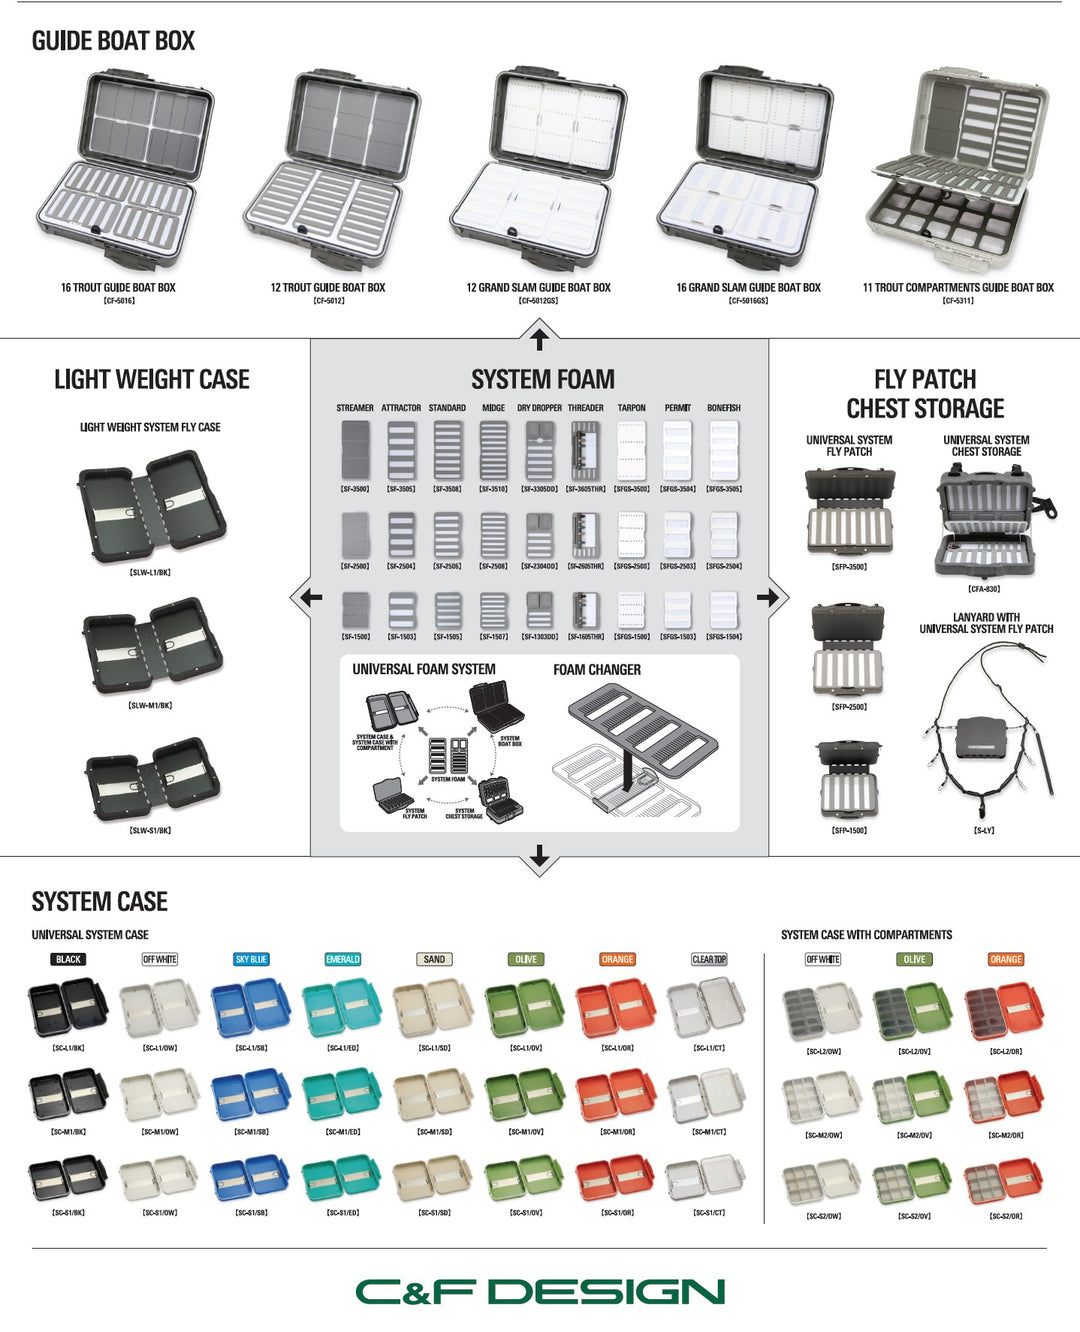 C&F Design Standard Universal System Foam (6) Pack